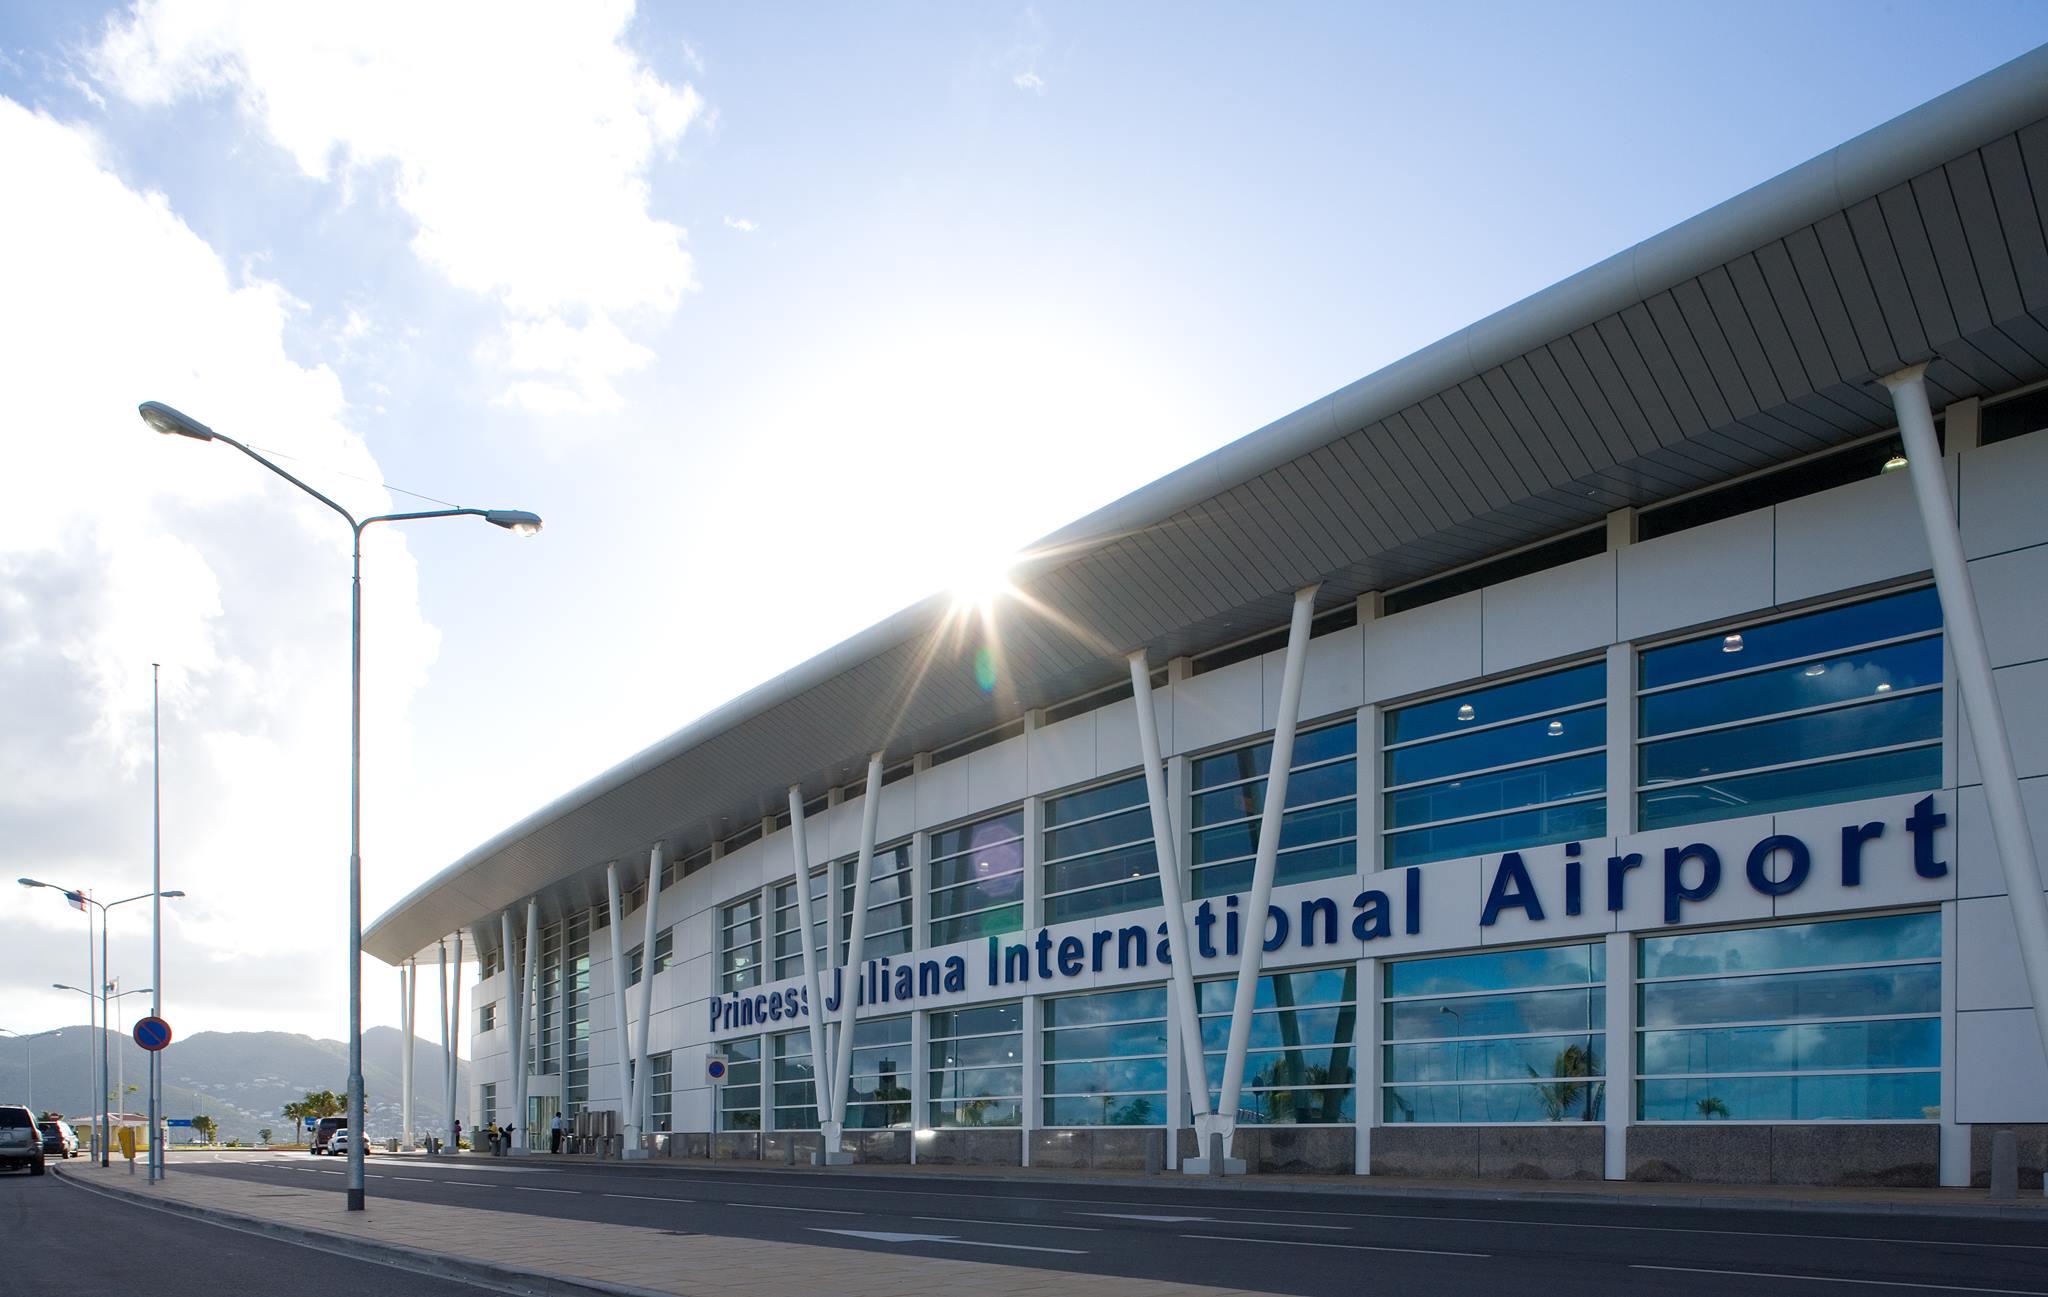 Sint-Maarten: L’Aéroport international Princess Juliana, élu Meilleur Aéroport de l’Année dans la Caraïbe